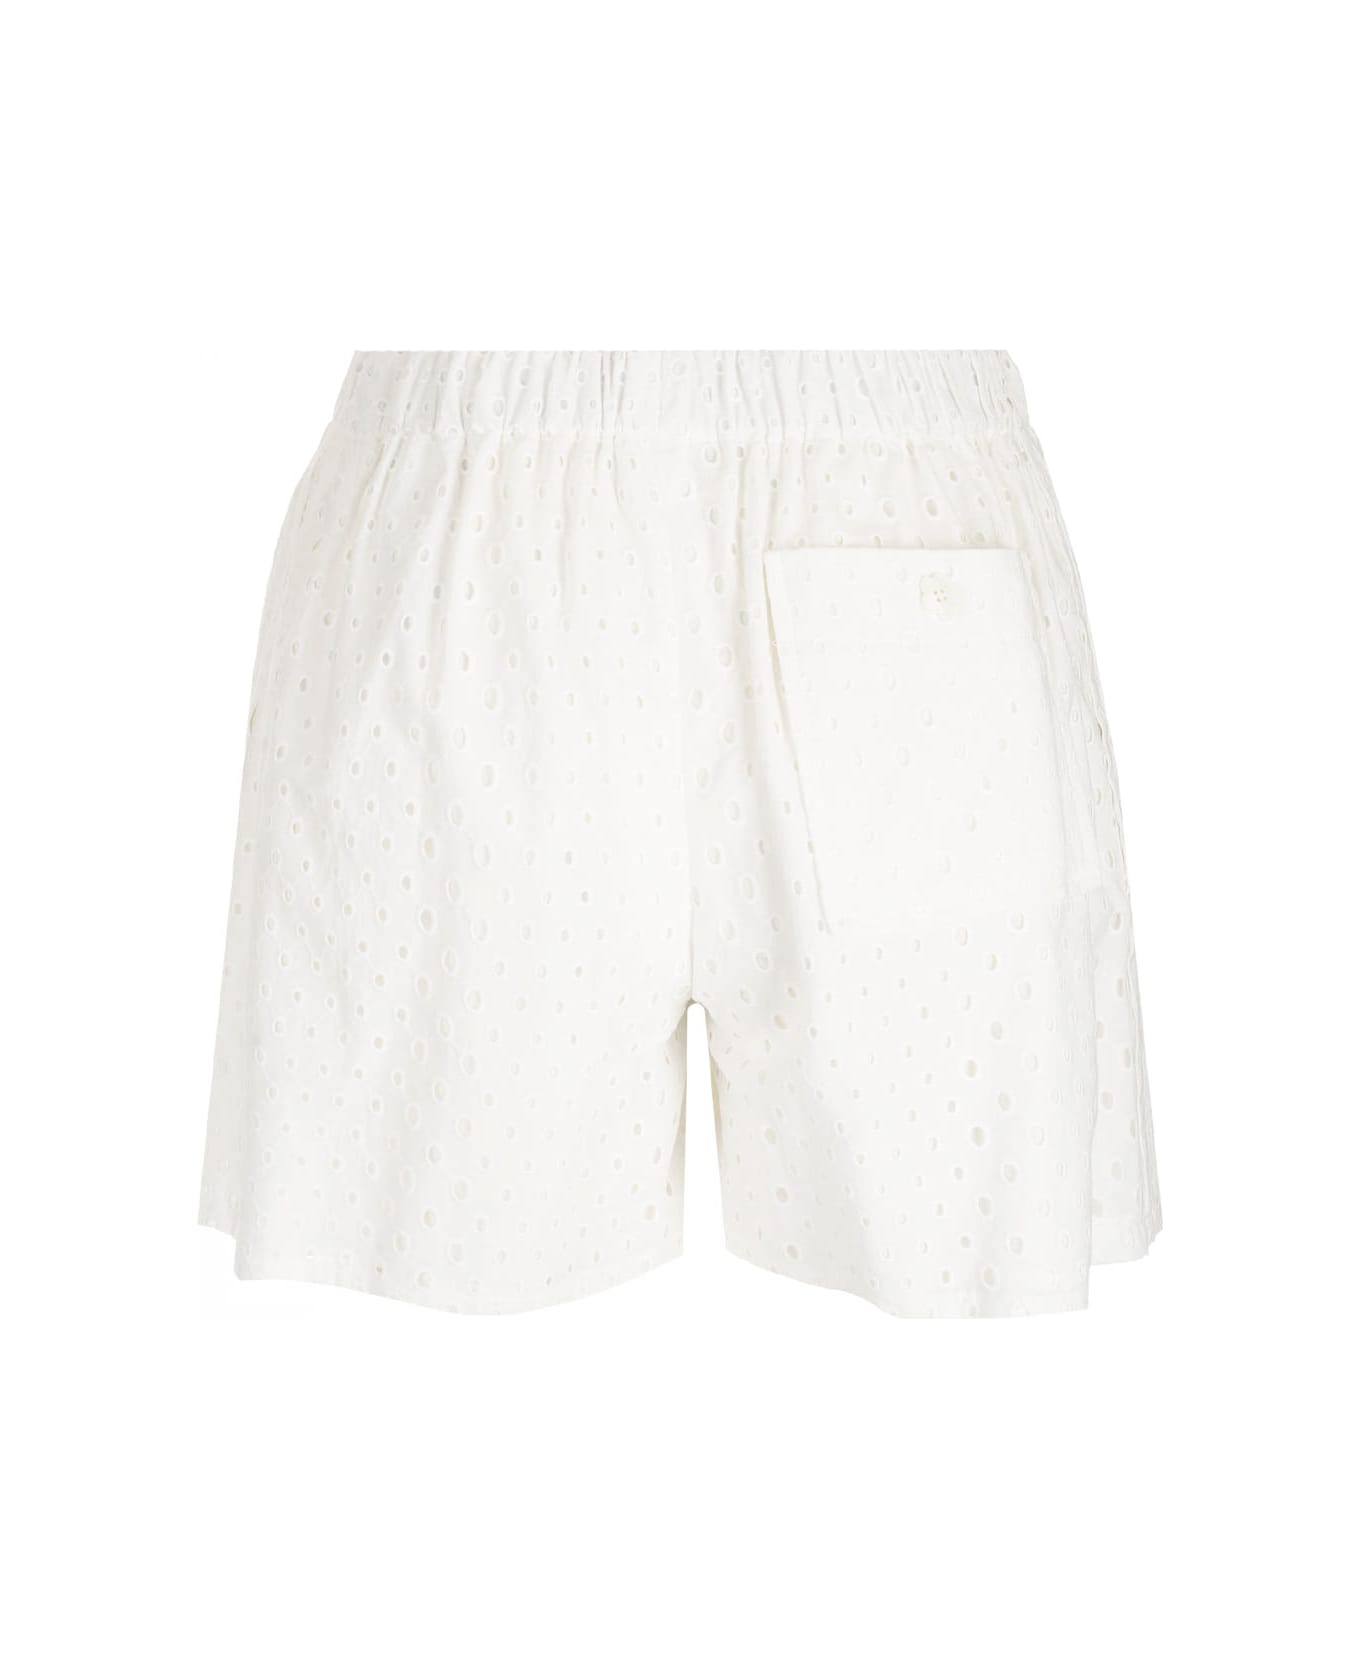 Kenzo White Broderie Anglaise Shorts - White